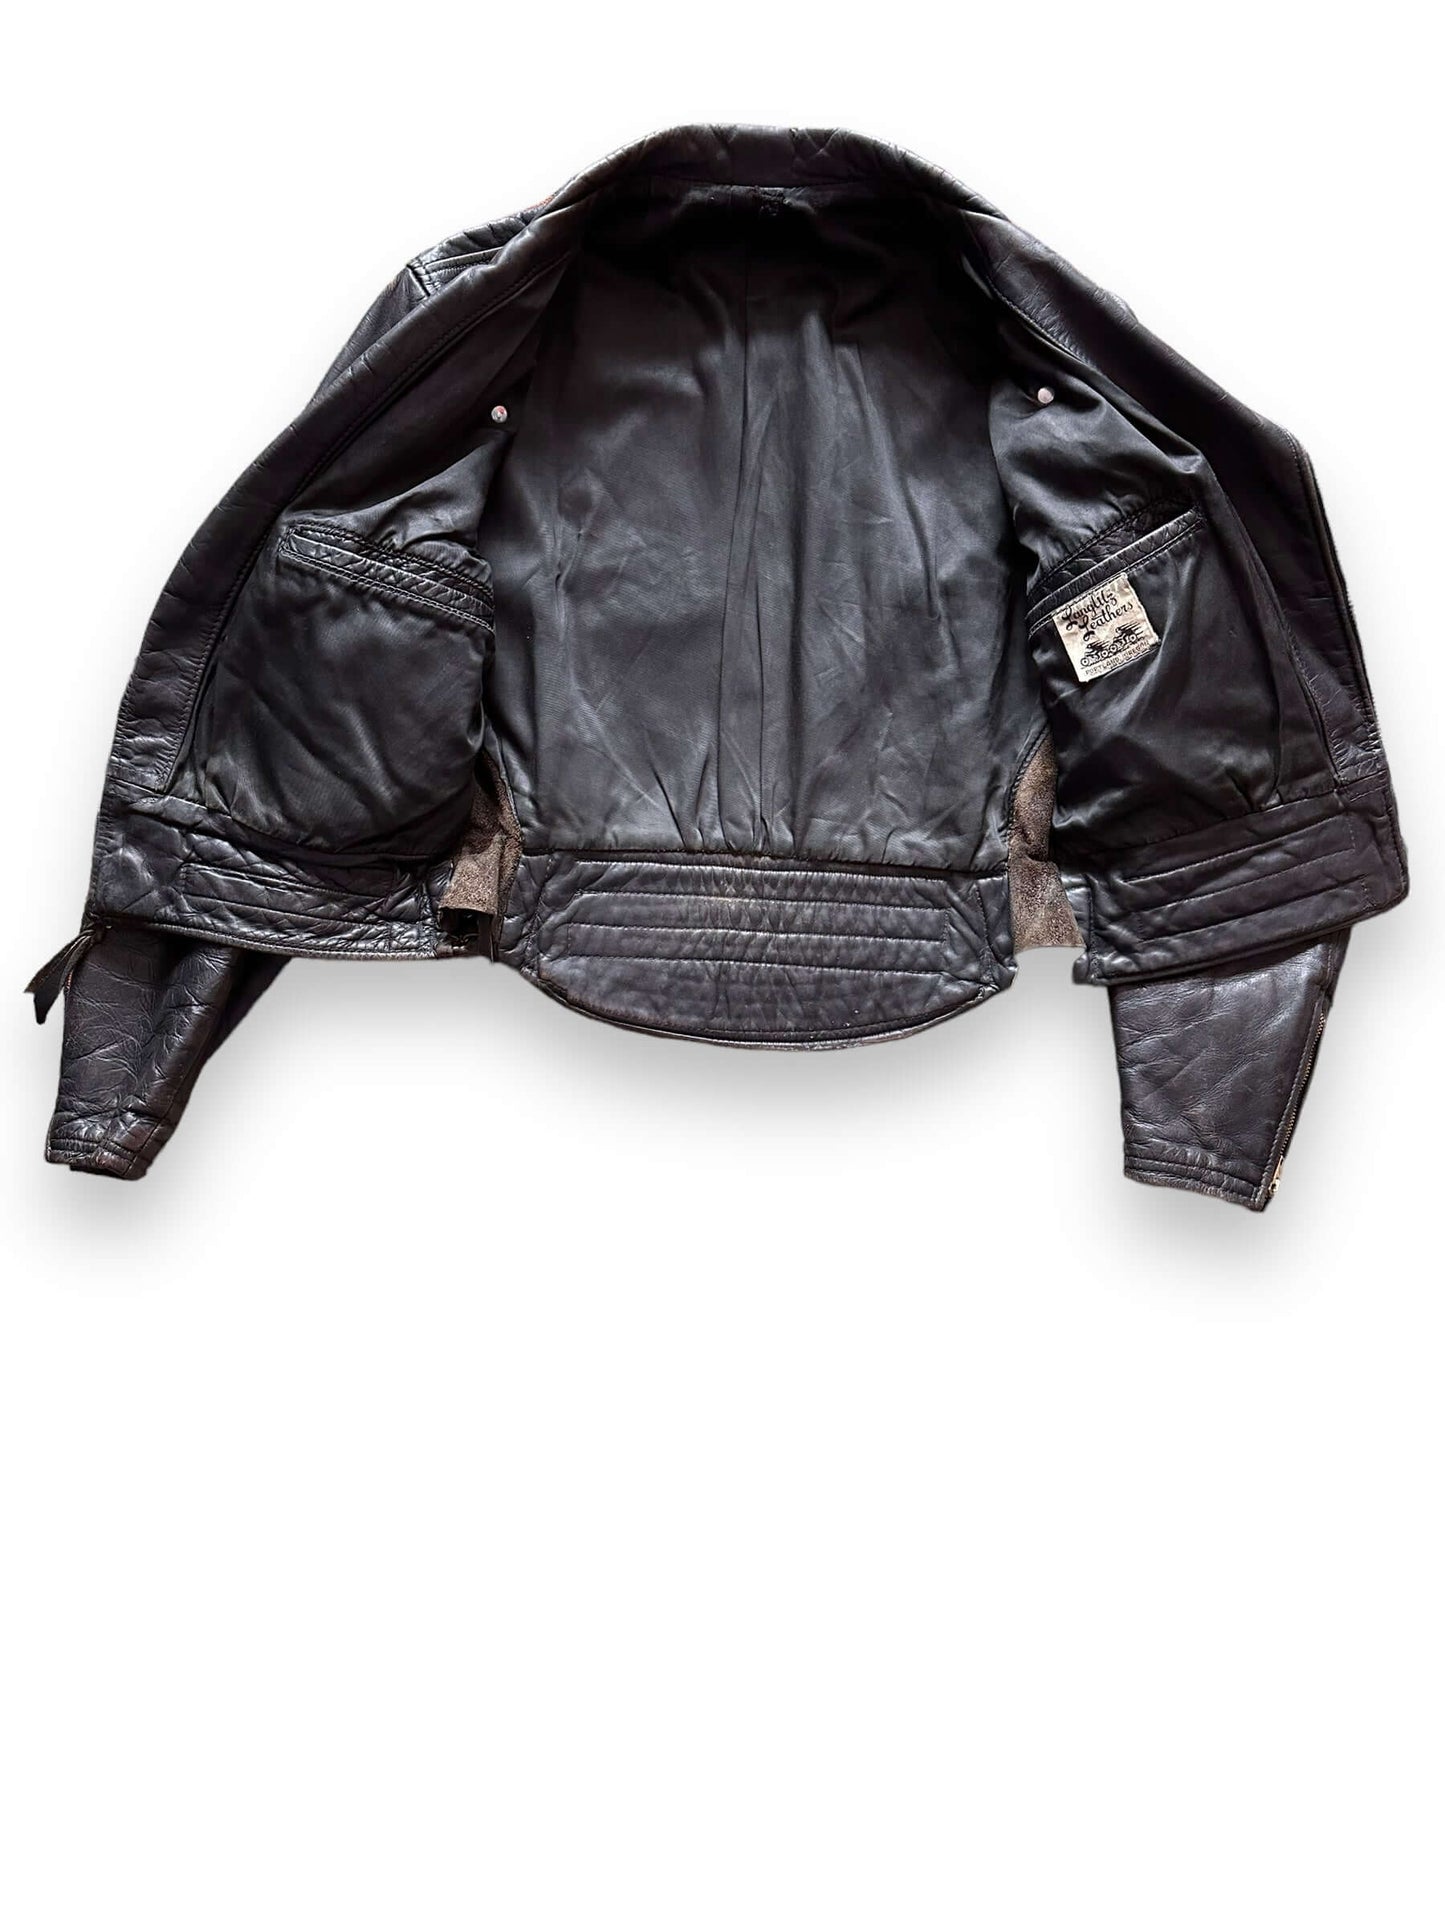 inside of 40's Era Langlitz Leather Jacket |  Barn Owl Vintage Goods | Vintage Leather Jackets Seattle